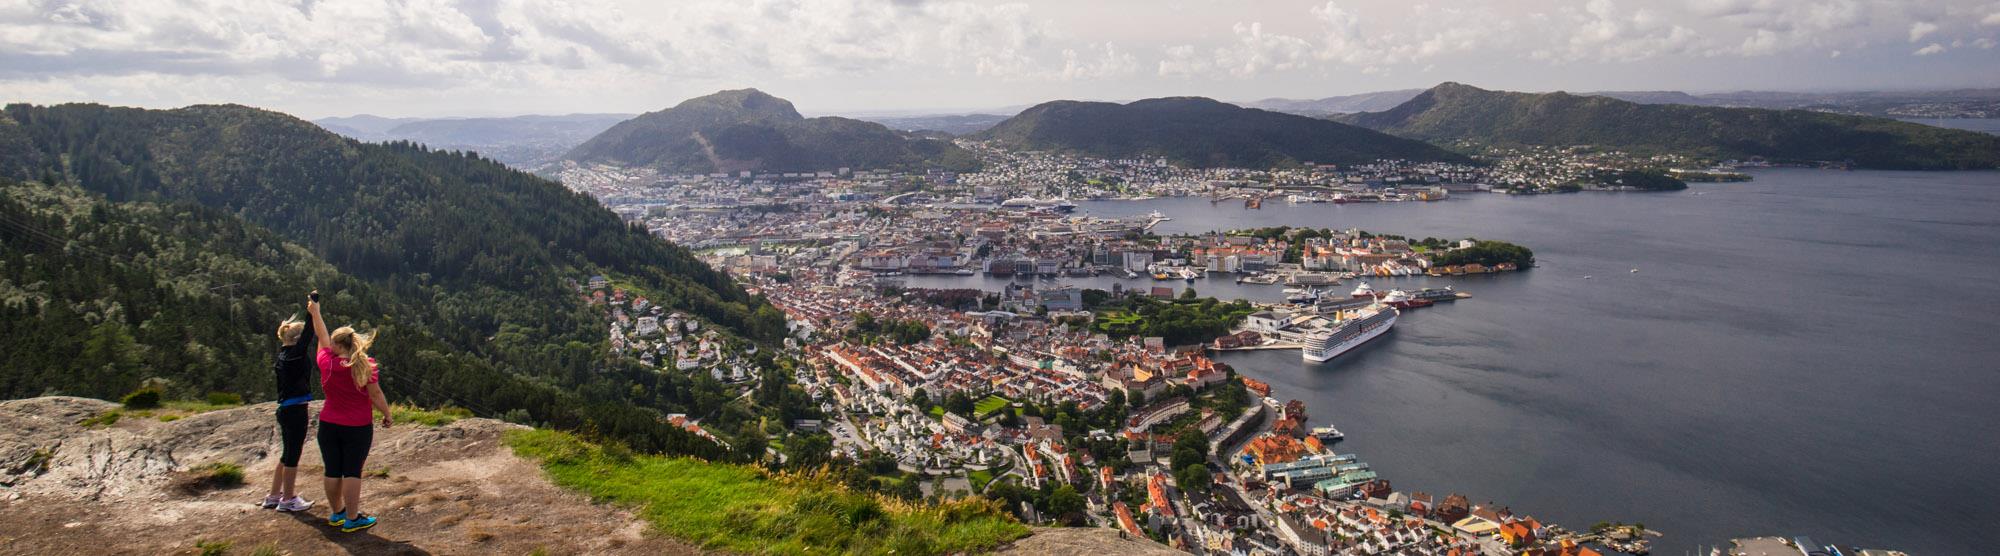 Aktiviteter i Bergen